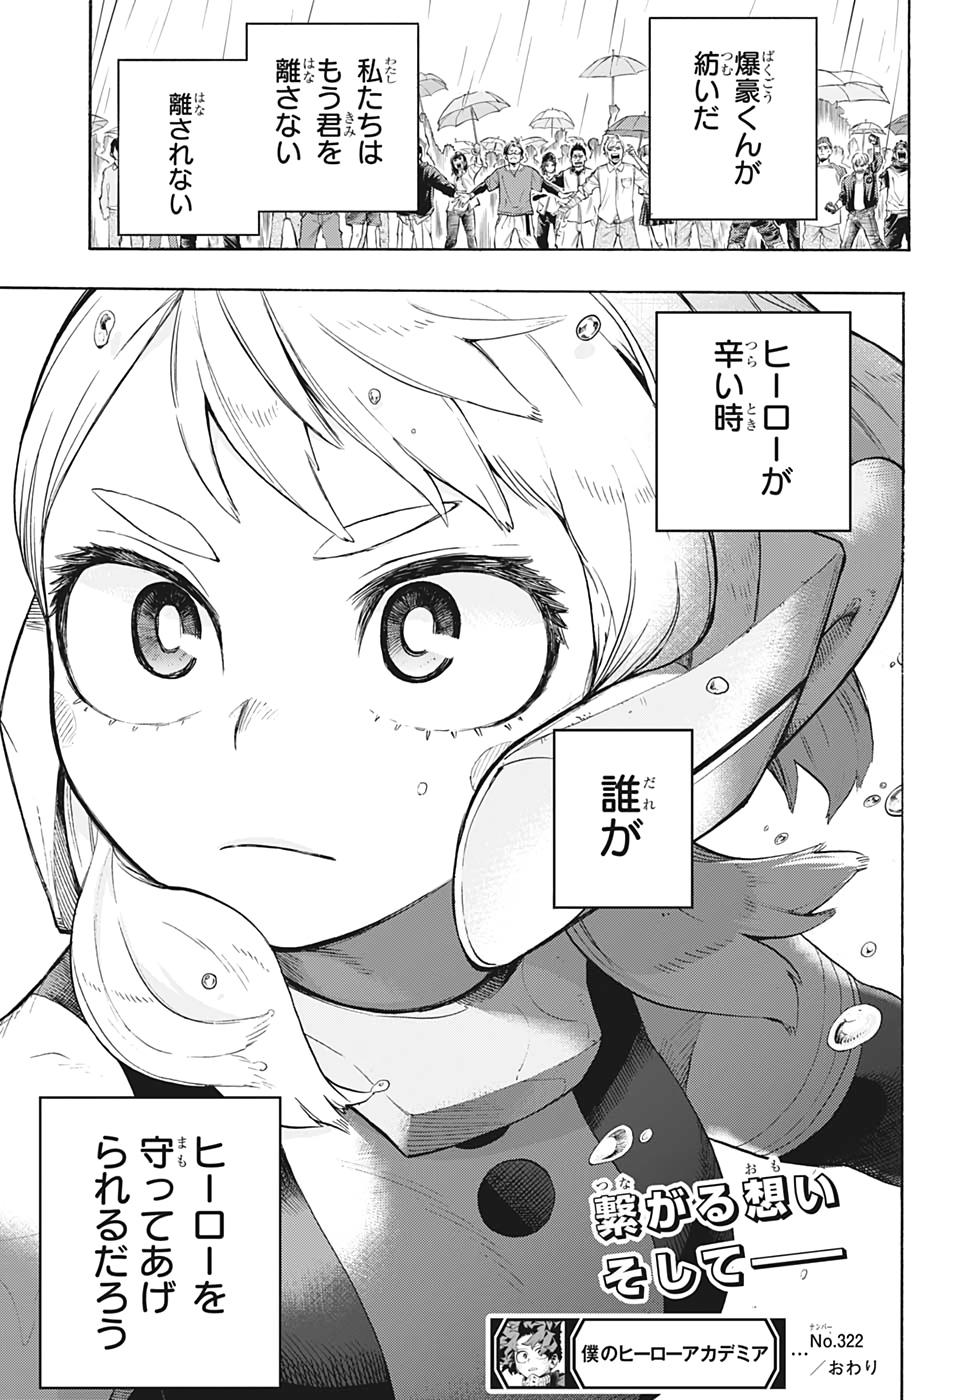 Boku no Hero Academia - Chapter 322 - Page 17